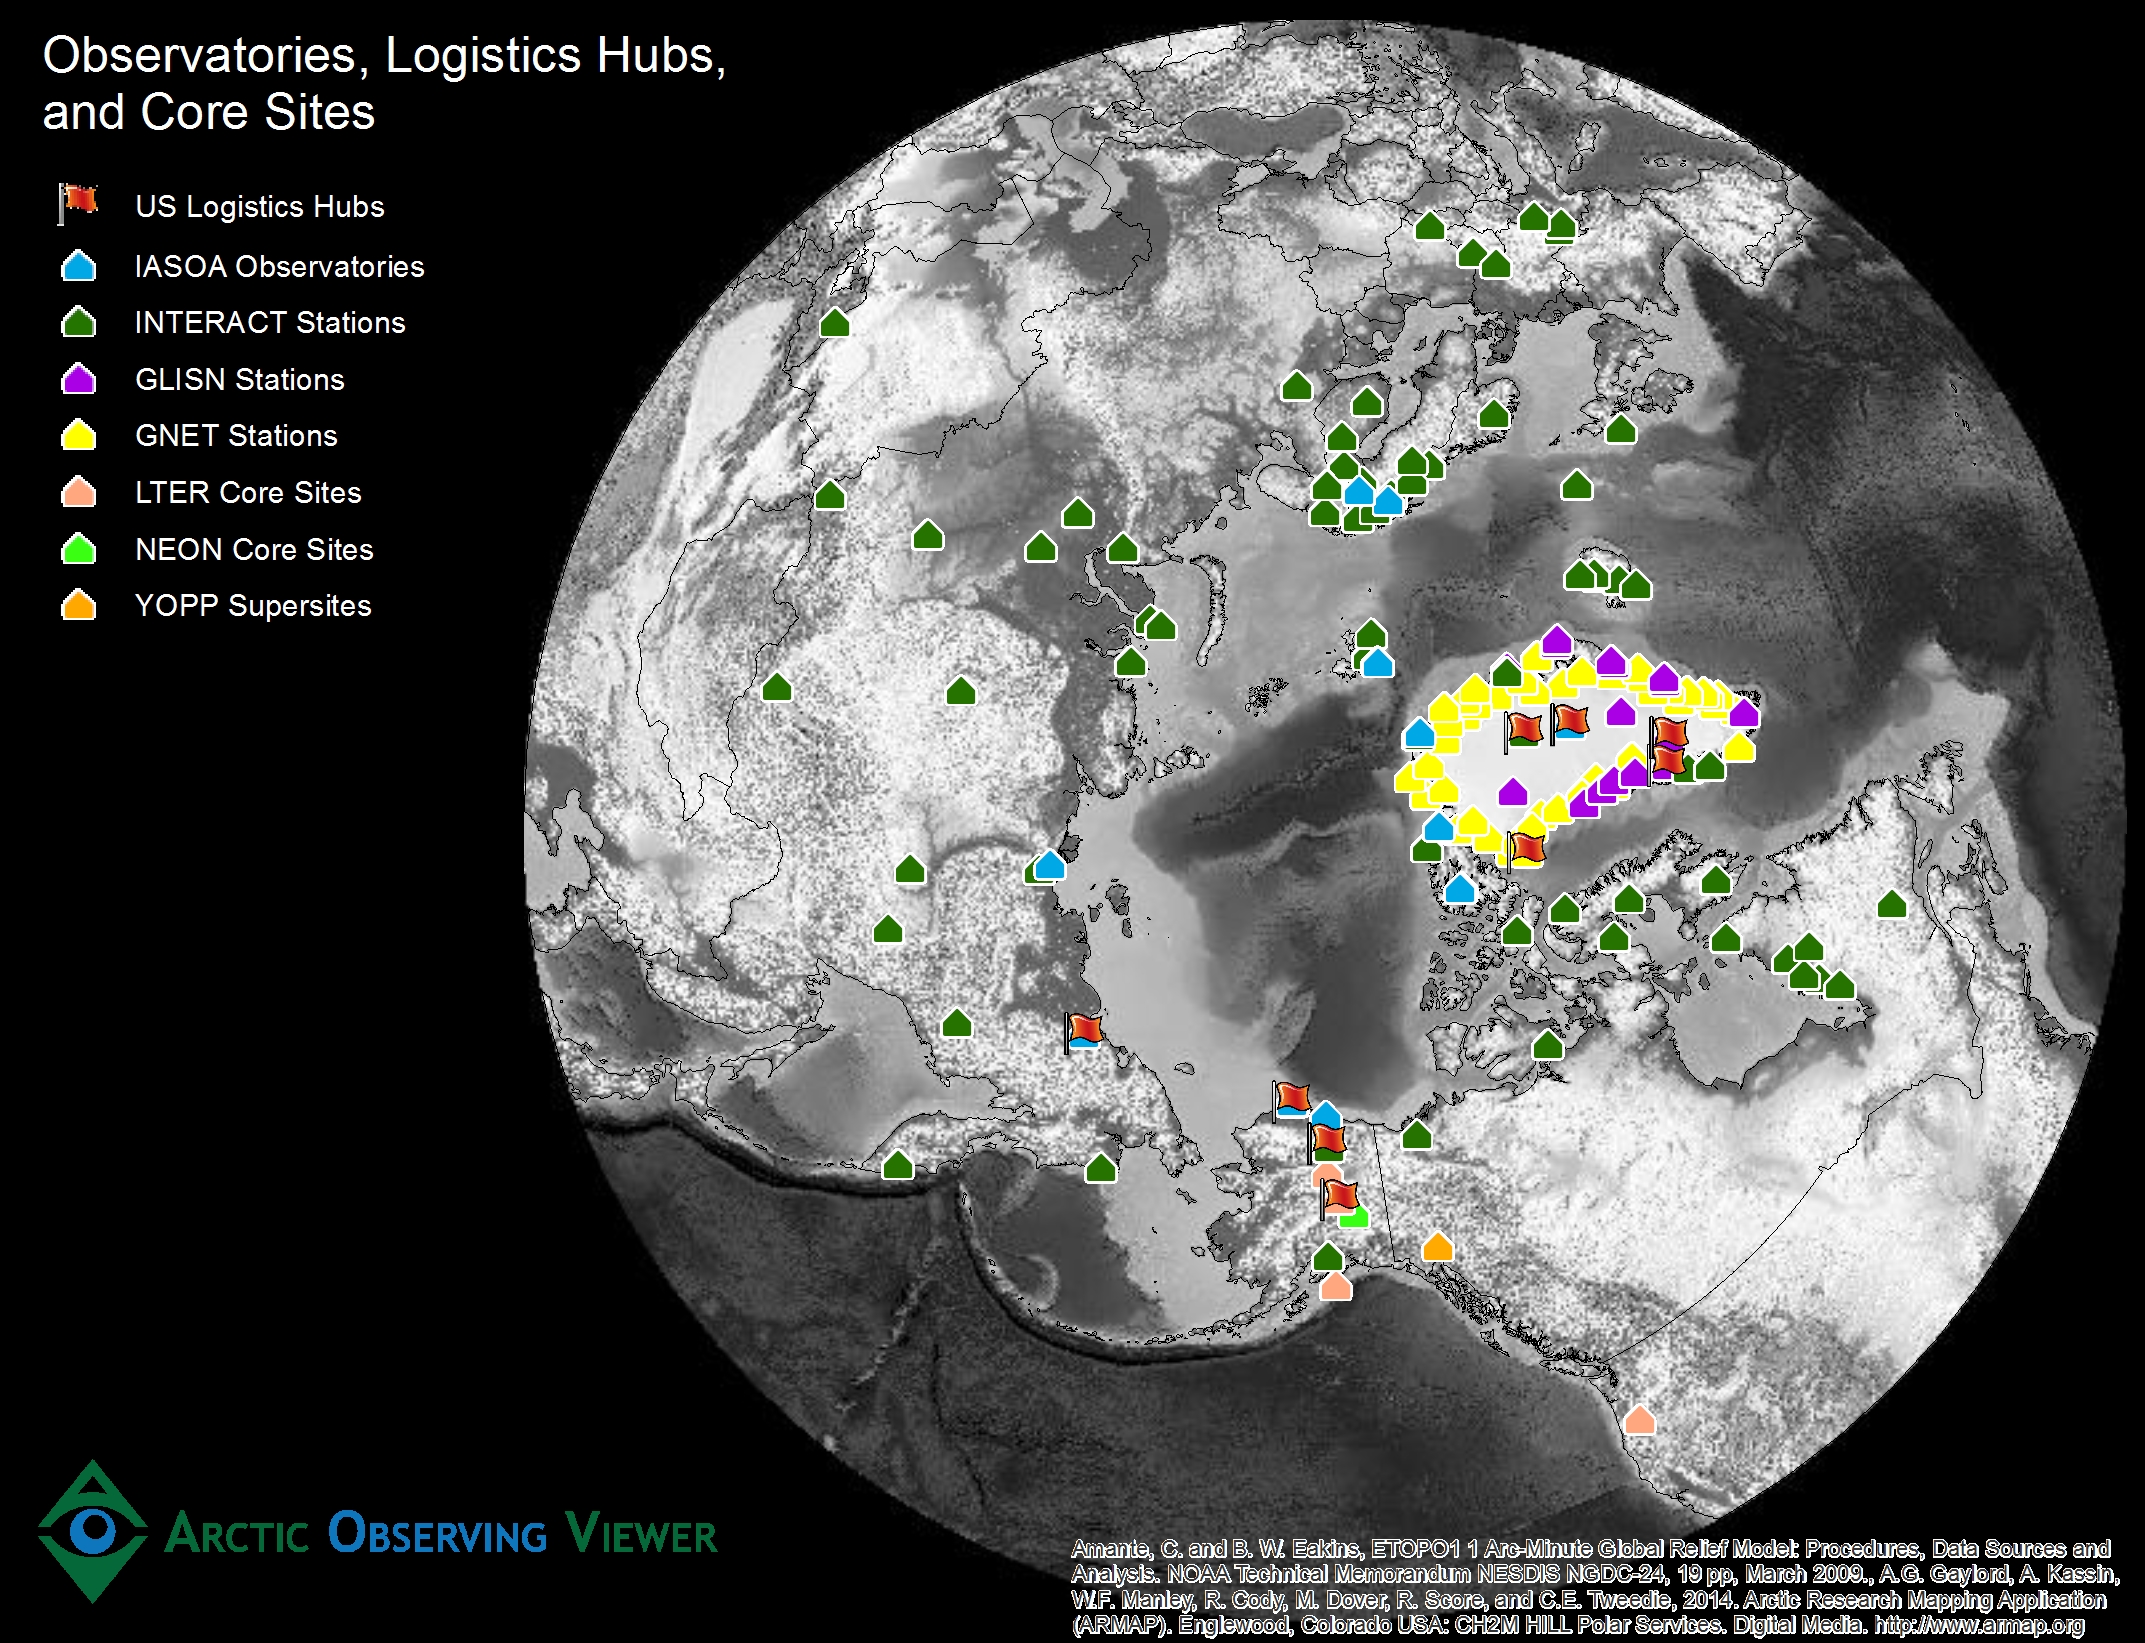 Observatories, Logistics Hubs, and Core Sites